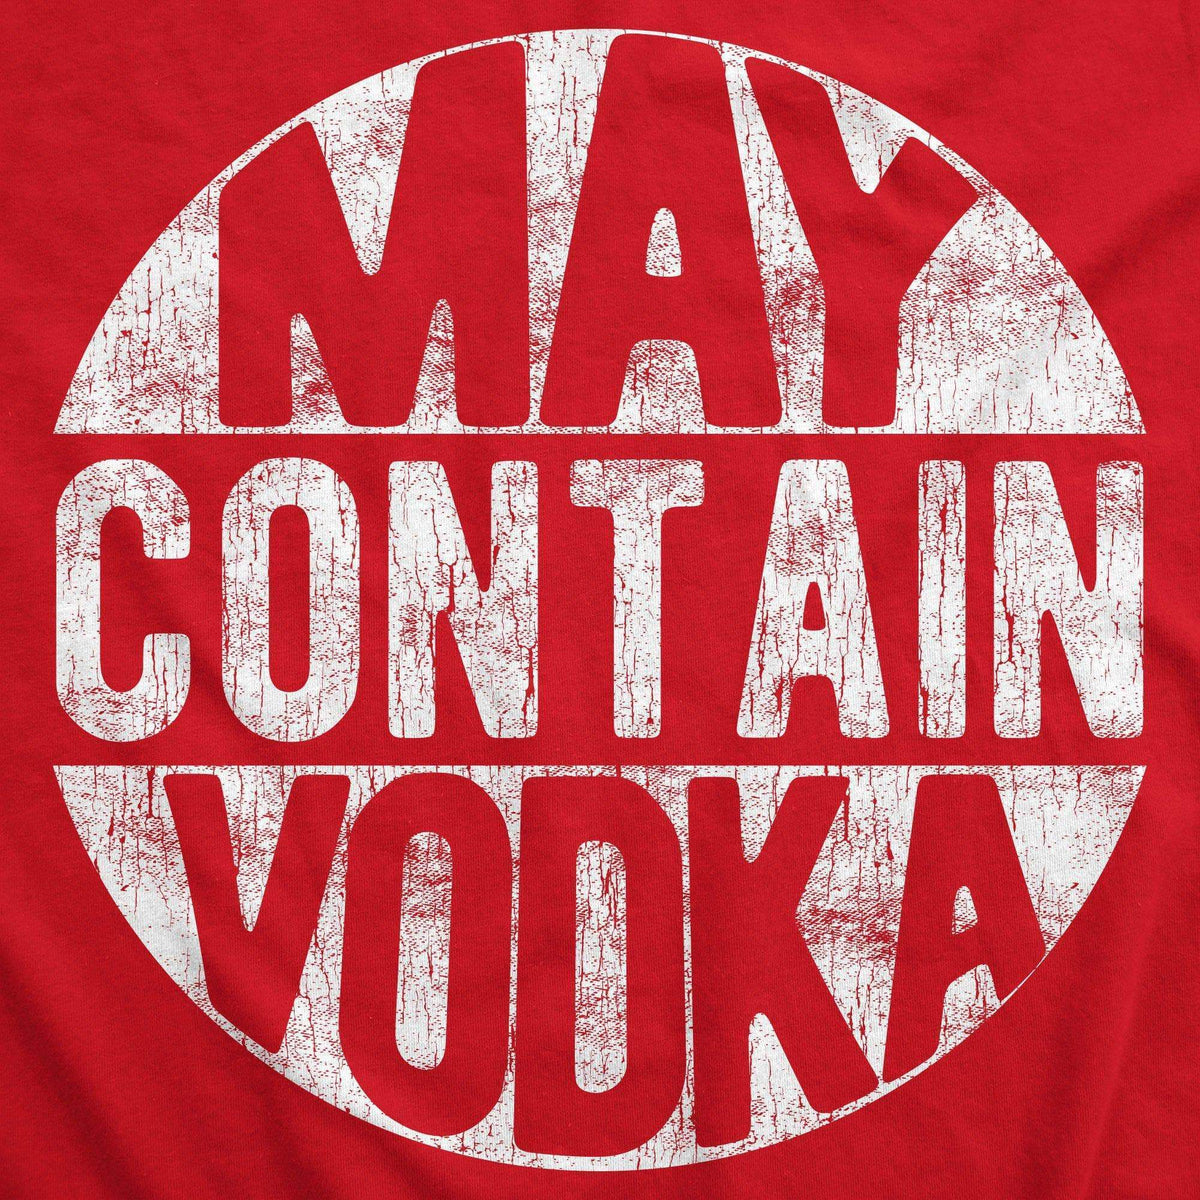 May Contain Vodka Men&#39;s Tank Top - Crazy Dog T-Shirts